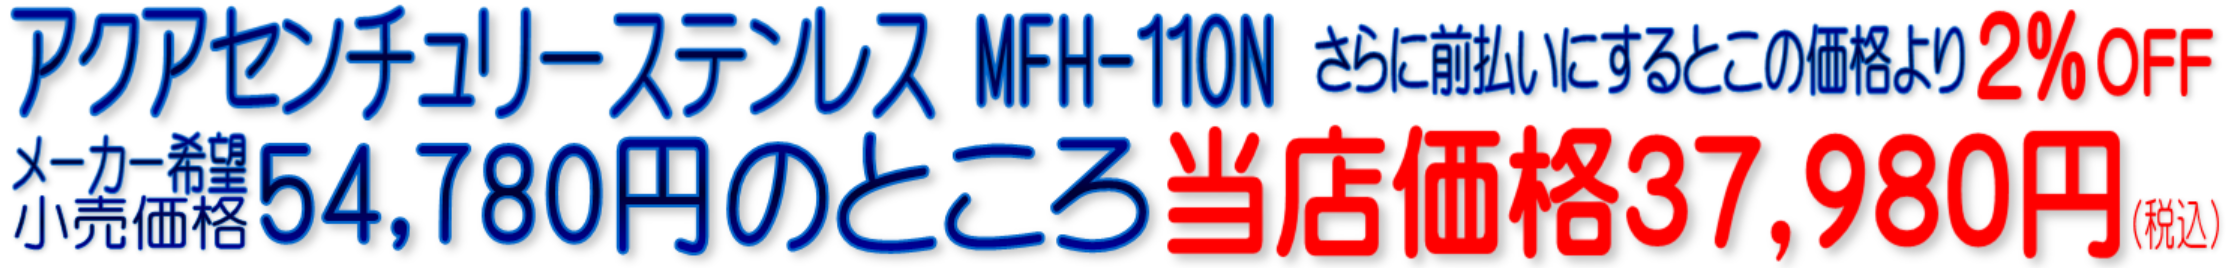 MFH-110N